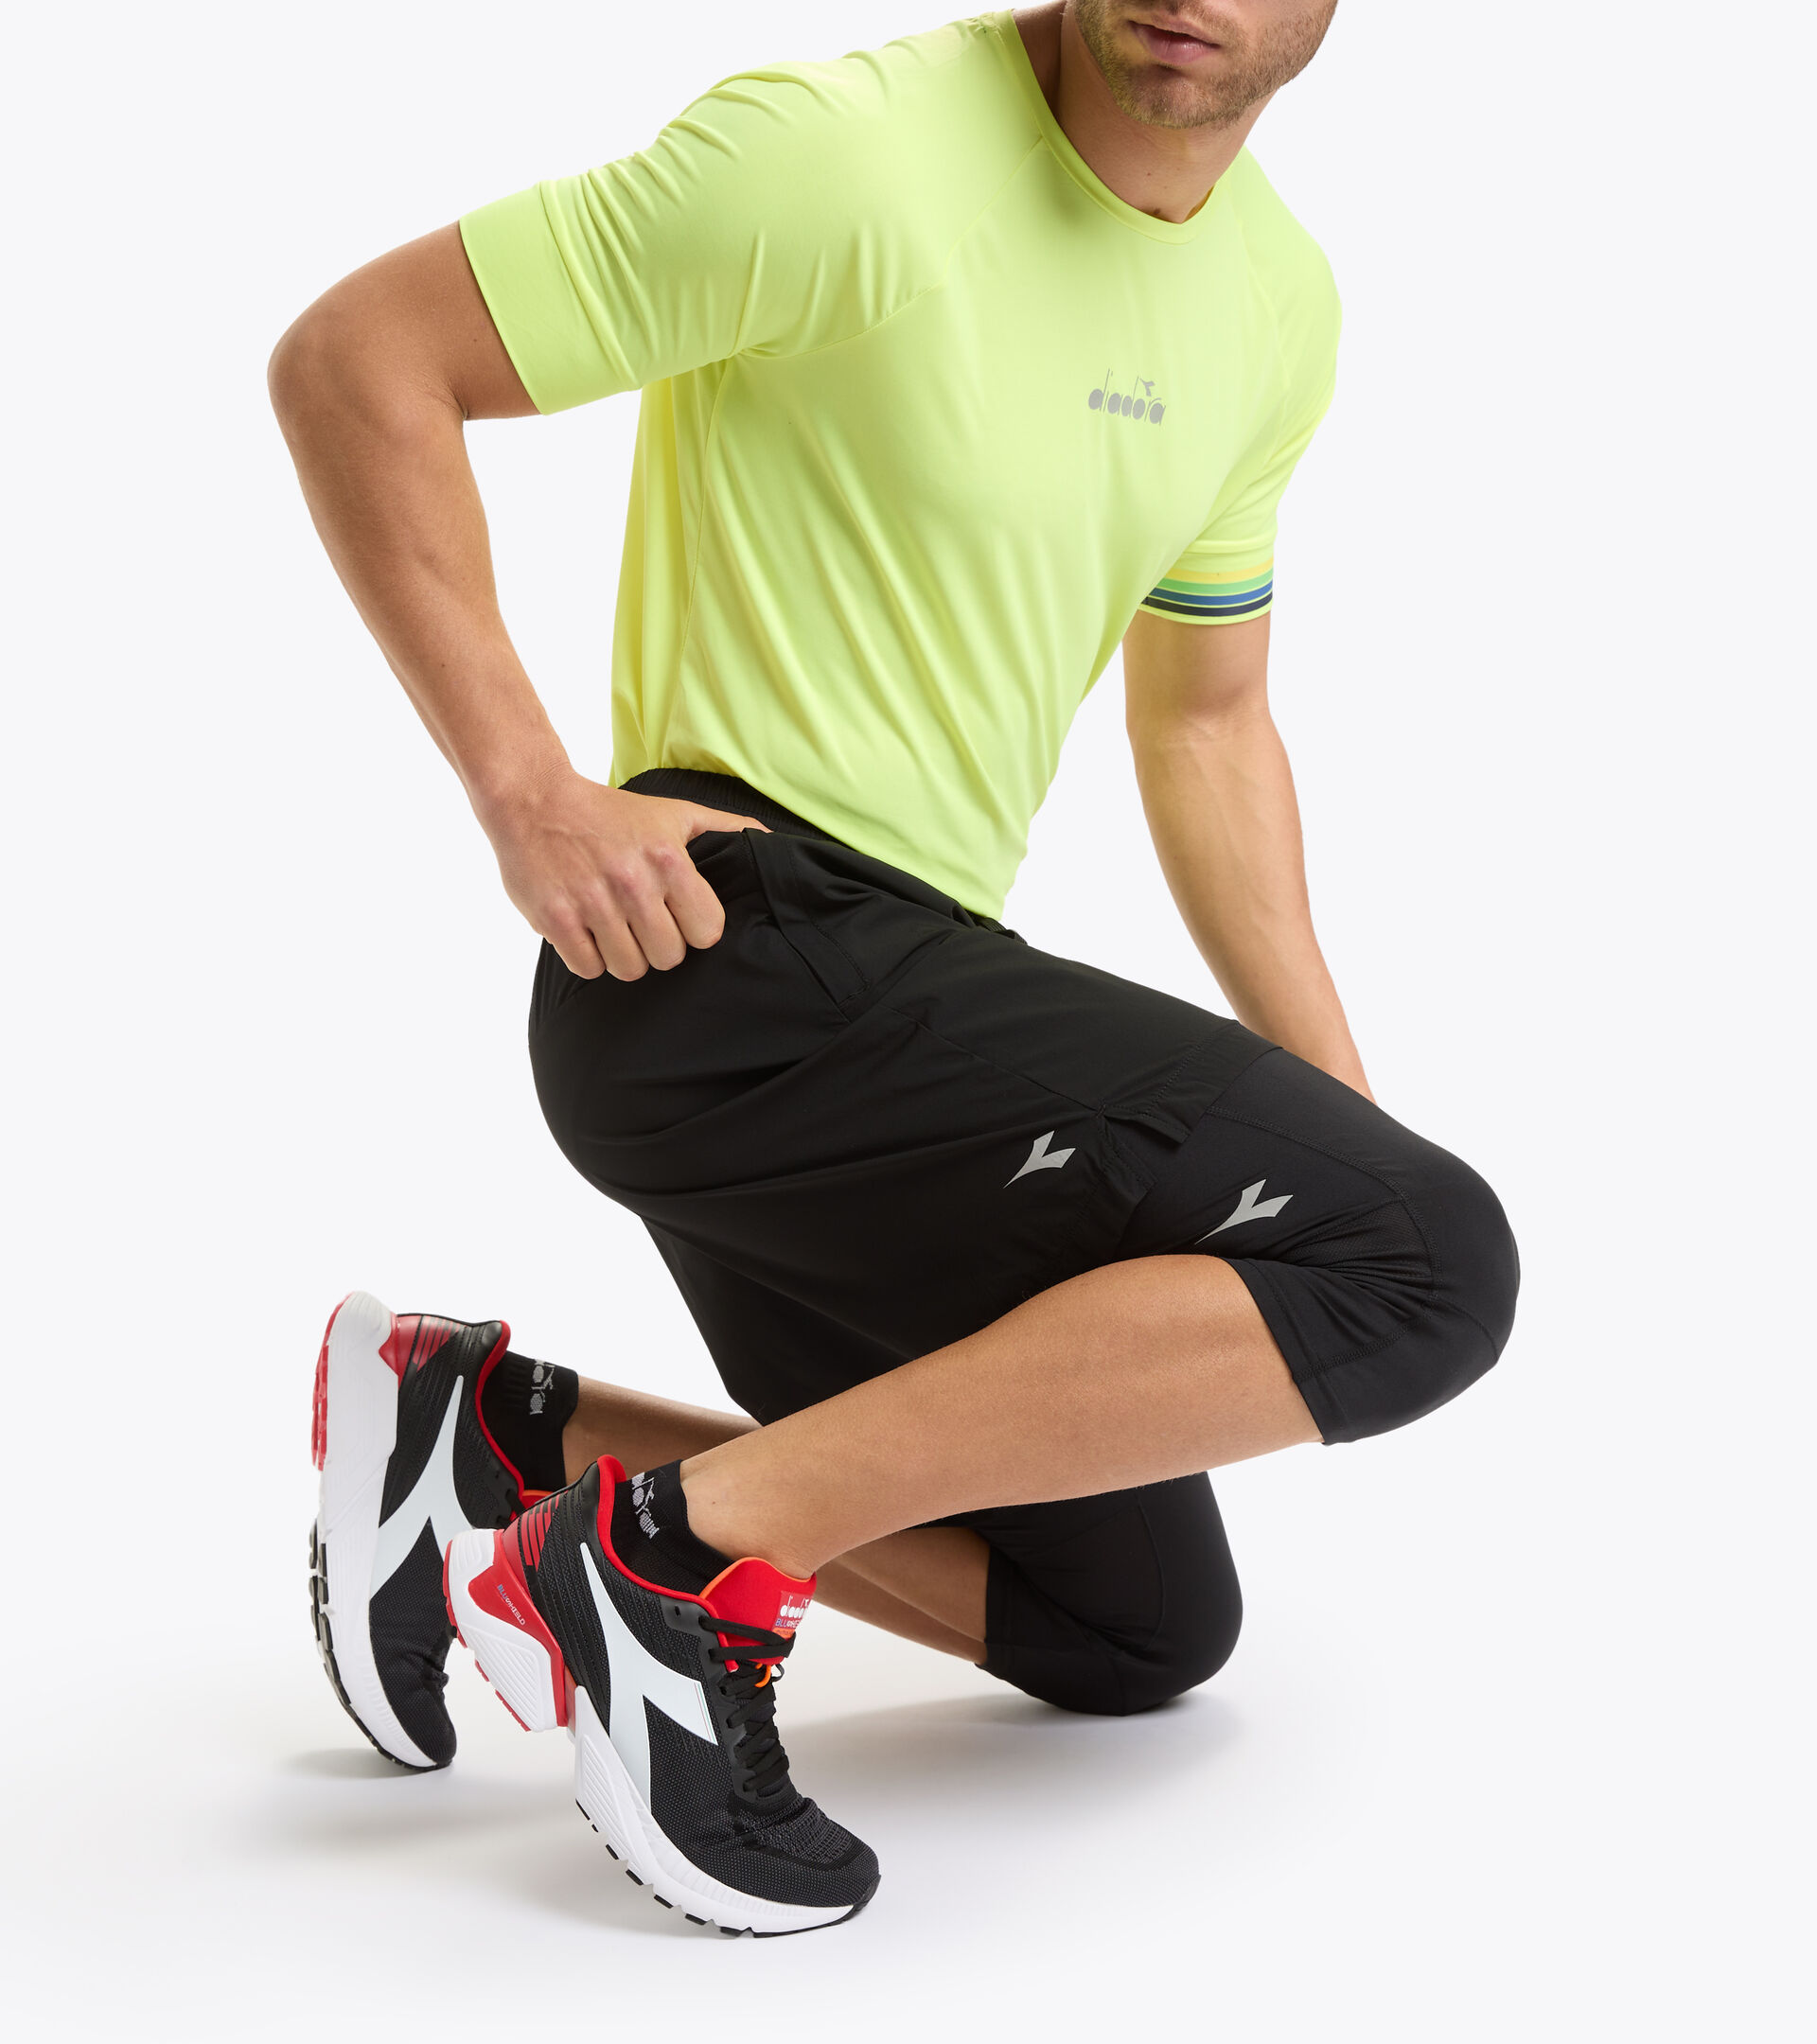 POWER SHORTS BE ONE Leggings with detachable shorts running set - Men -  Diadora Online Store GR